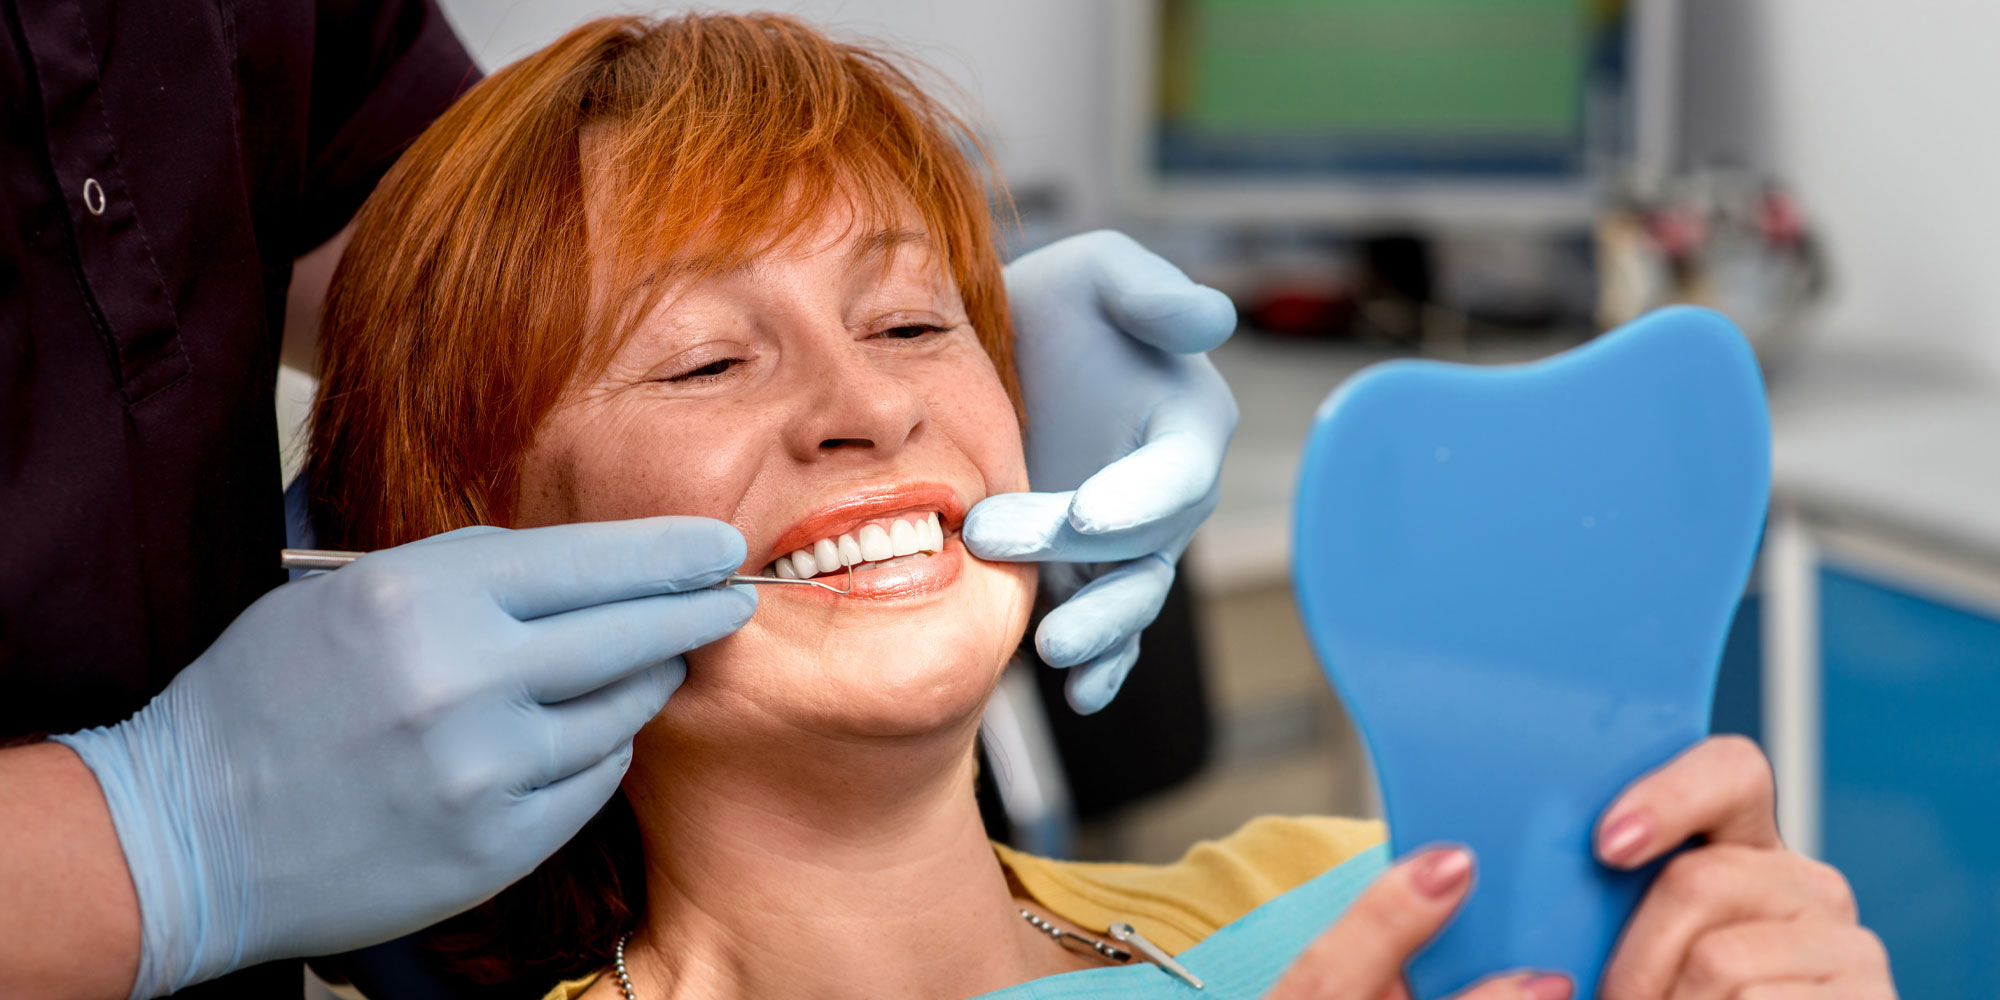 patient undergoing full arch dental implants procedure